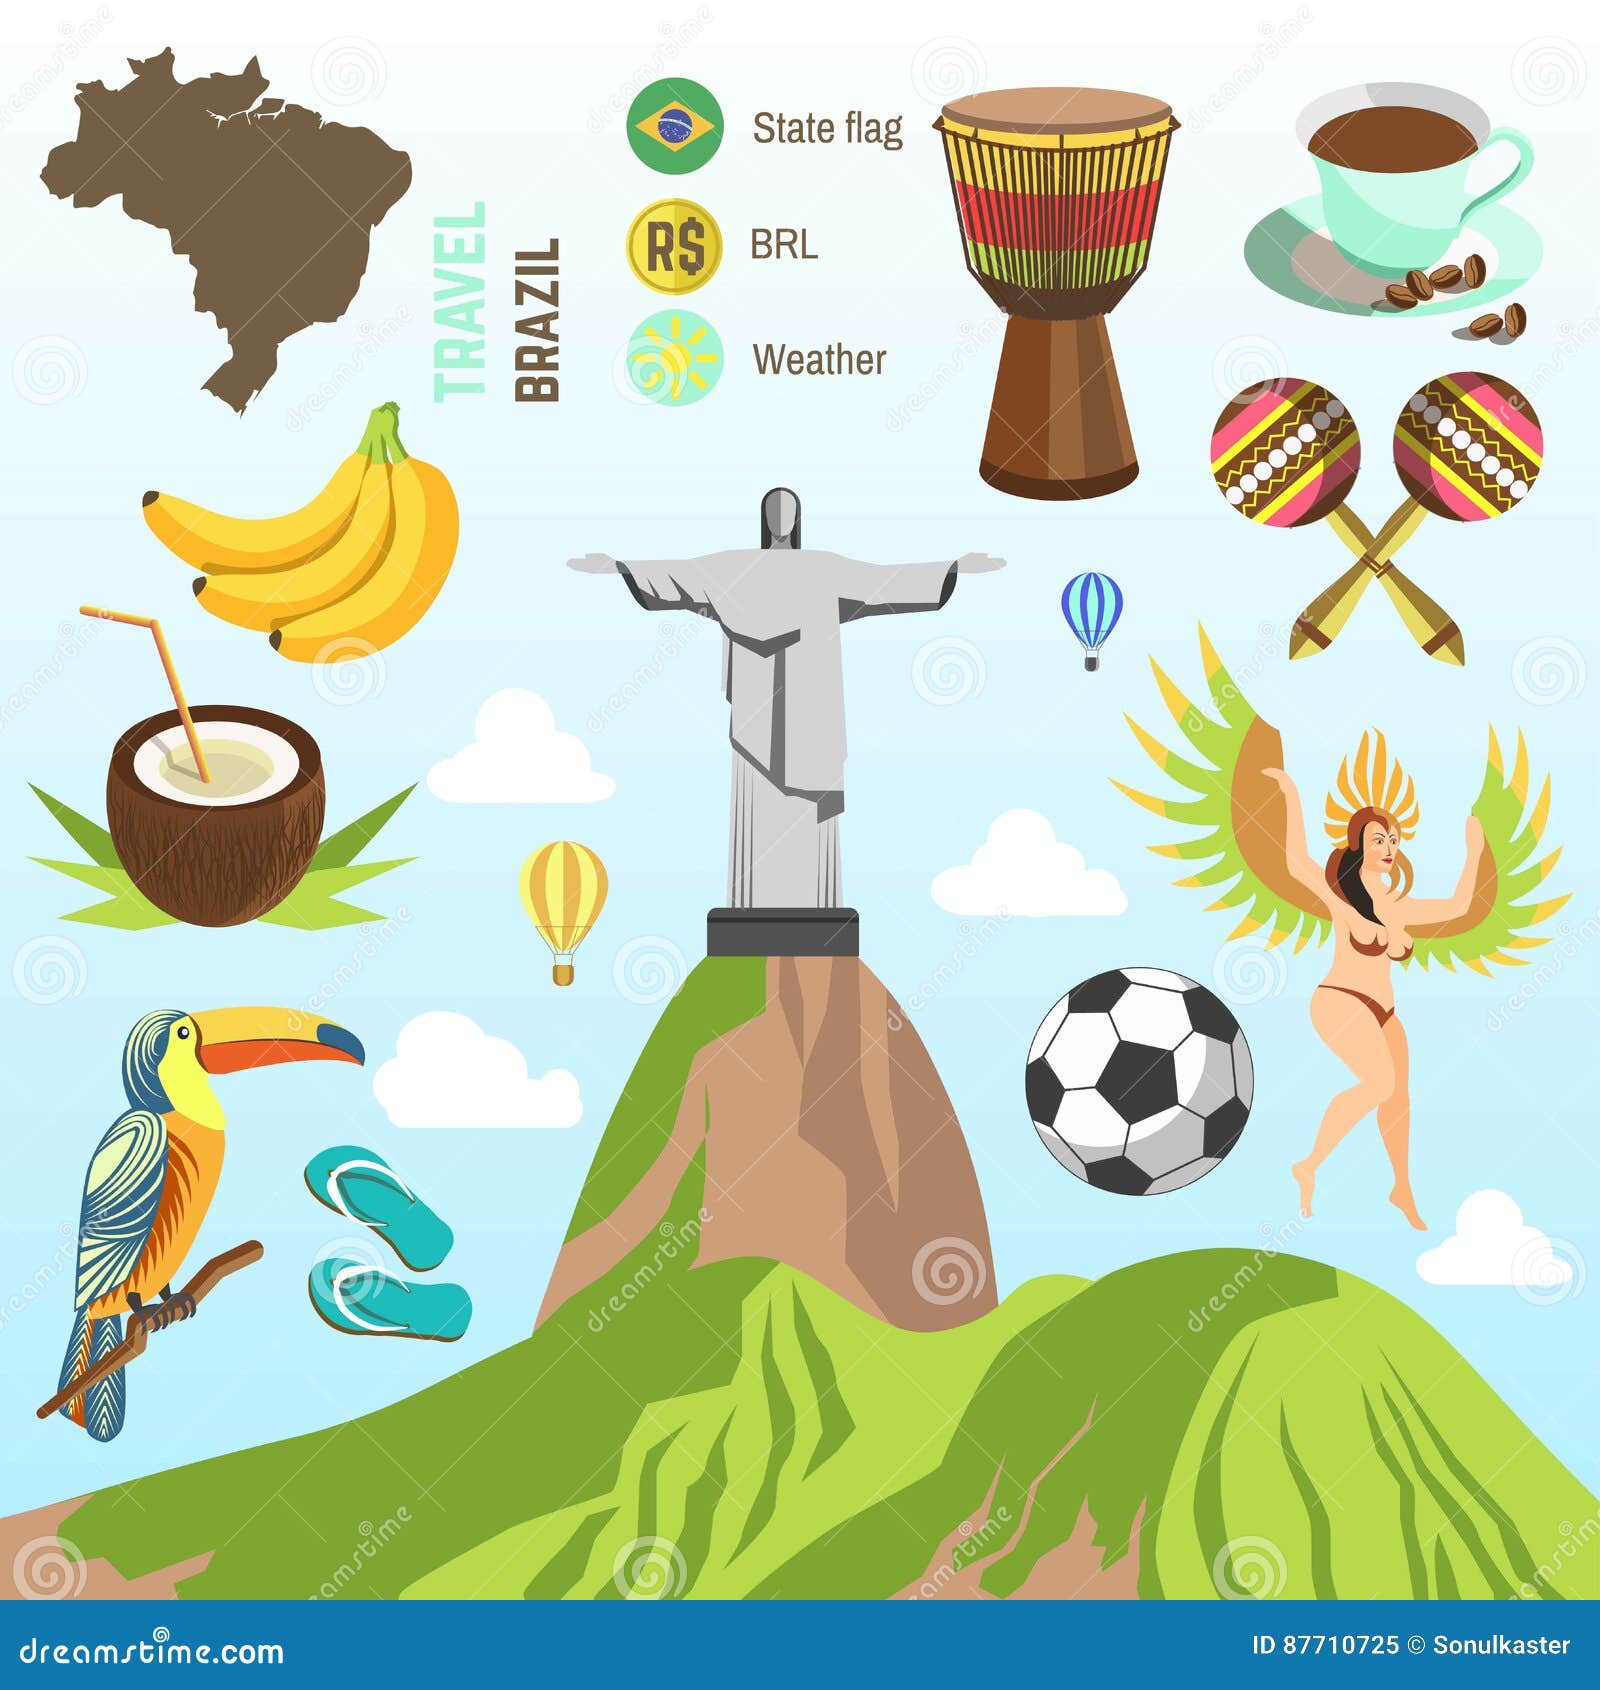 Brasil Simplificou Crachá De Mapa, Design Plano Moderno Royalty Free SVG,  Cliparts, Vetores, e Ilustrações Stock. Image 107463986